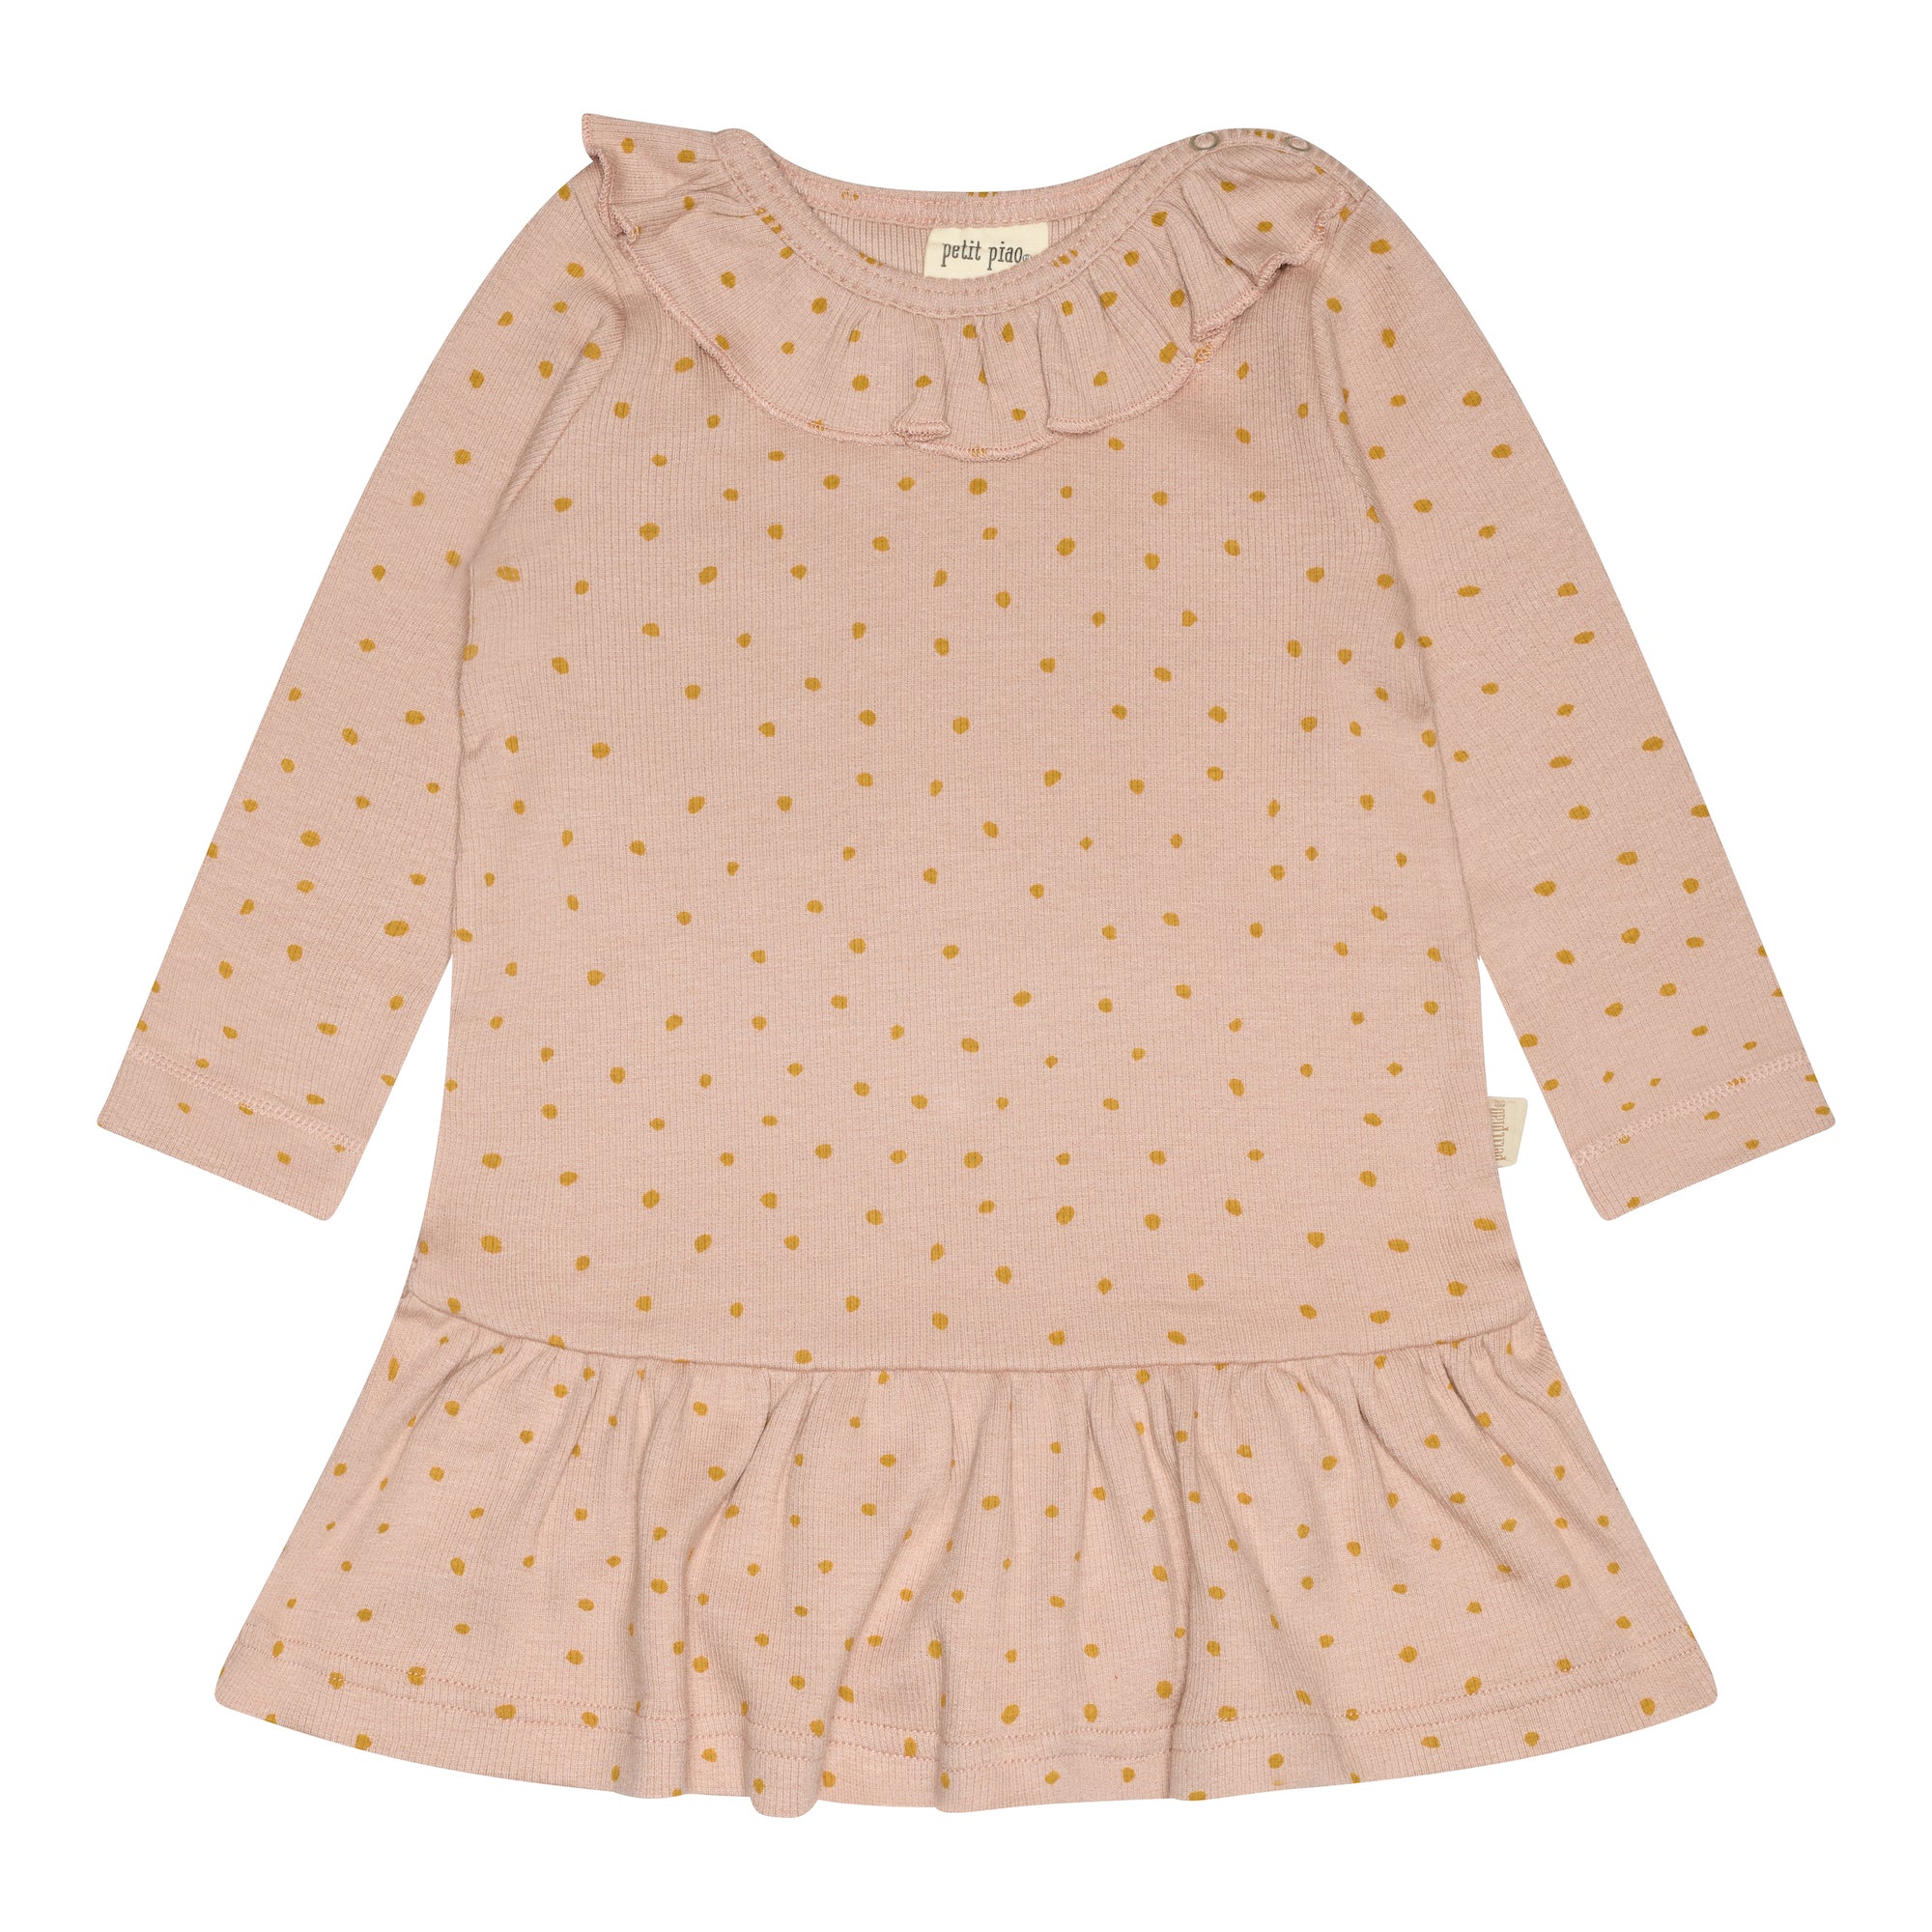 Petit Piao - Dress LS Modal O-Neck Frill Dot, PP1309 - Adobe Rose / Mustard Gold